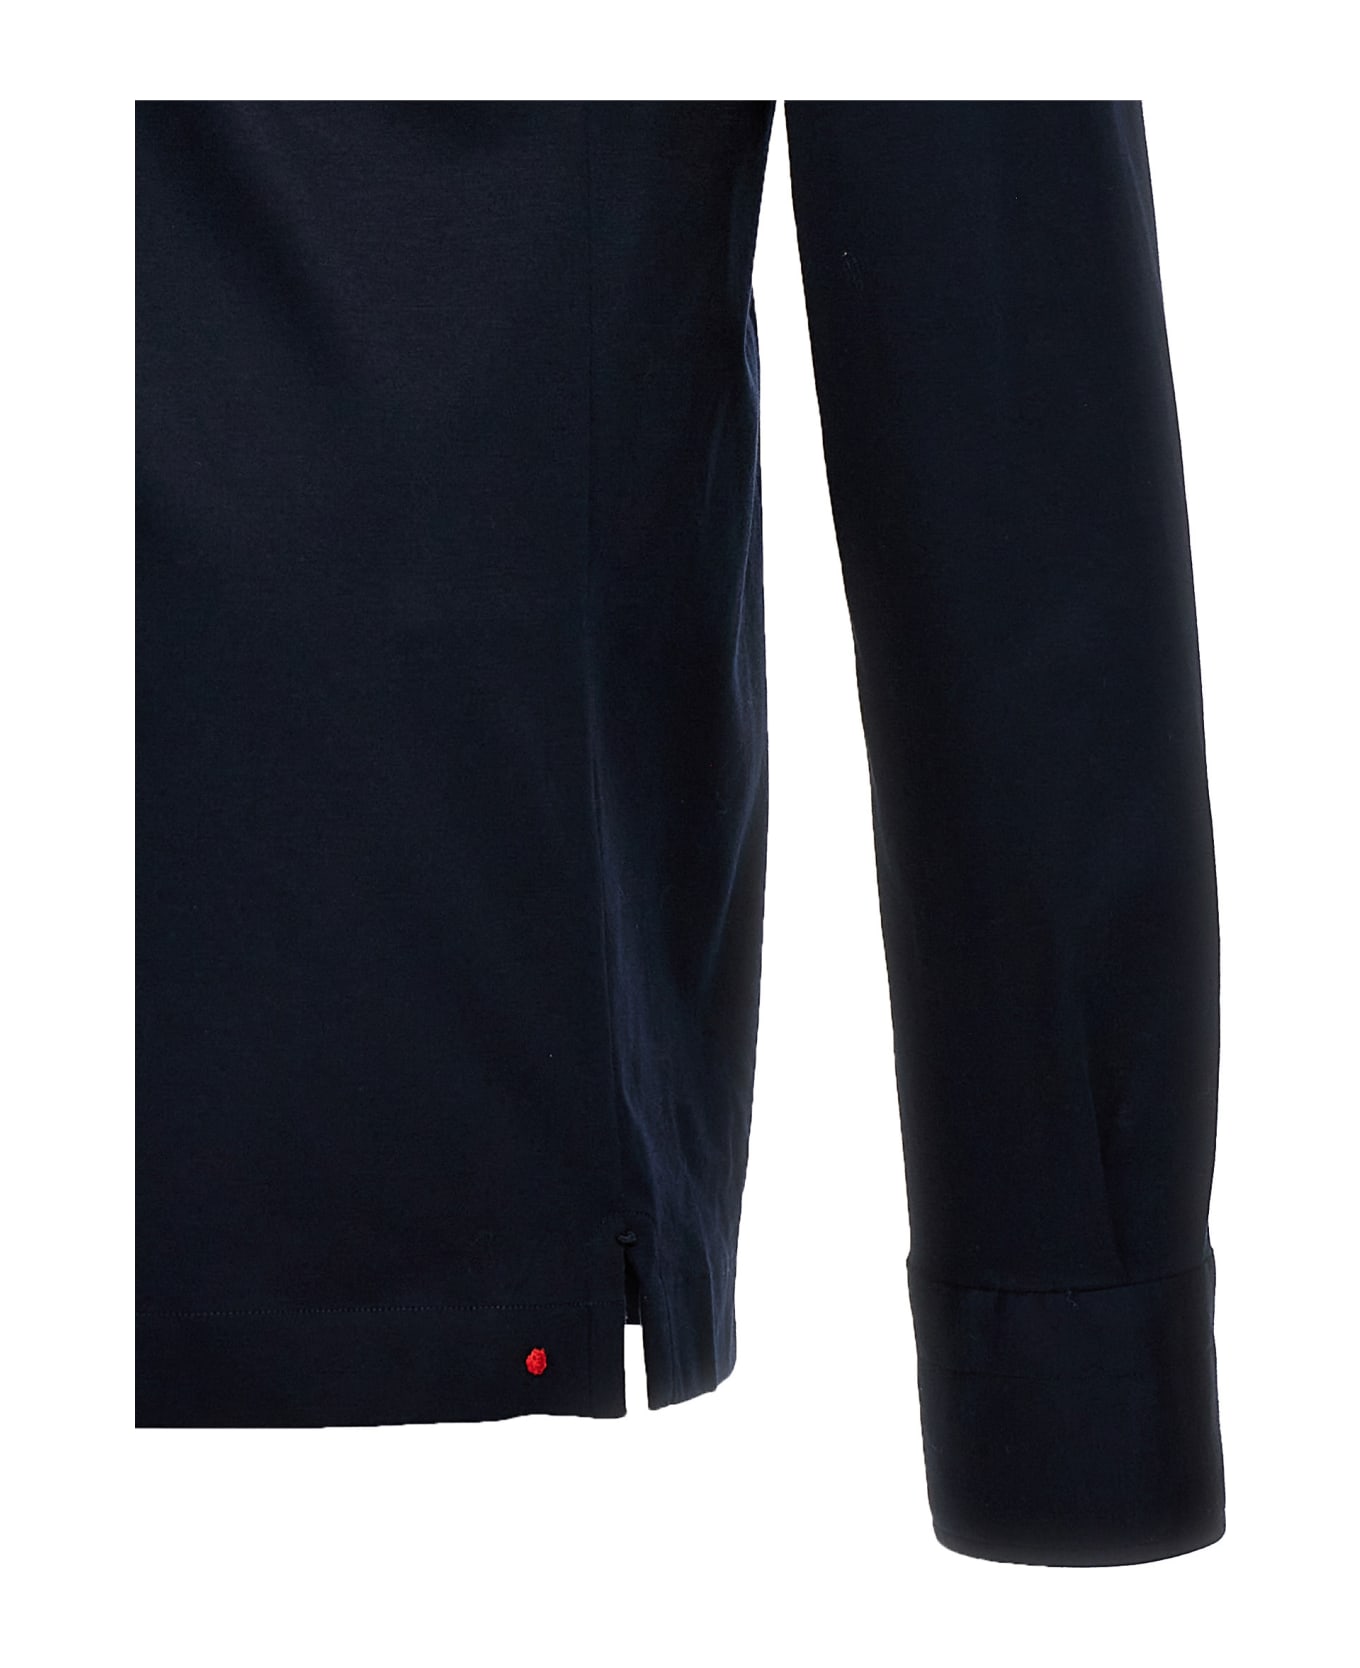 Kiton Long Sleeve Polo Shirt - Blue